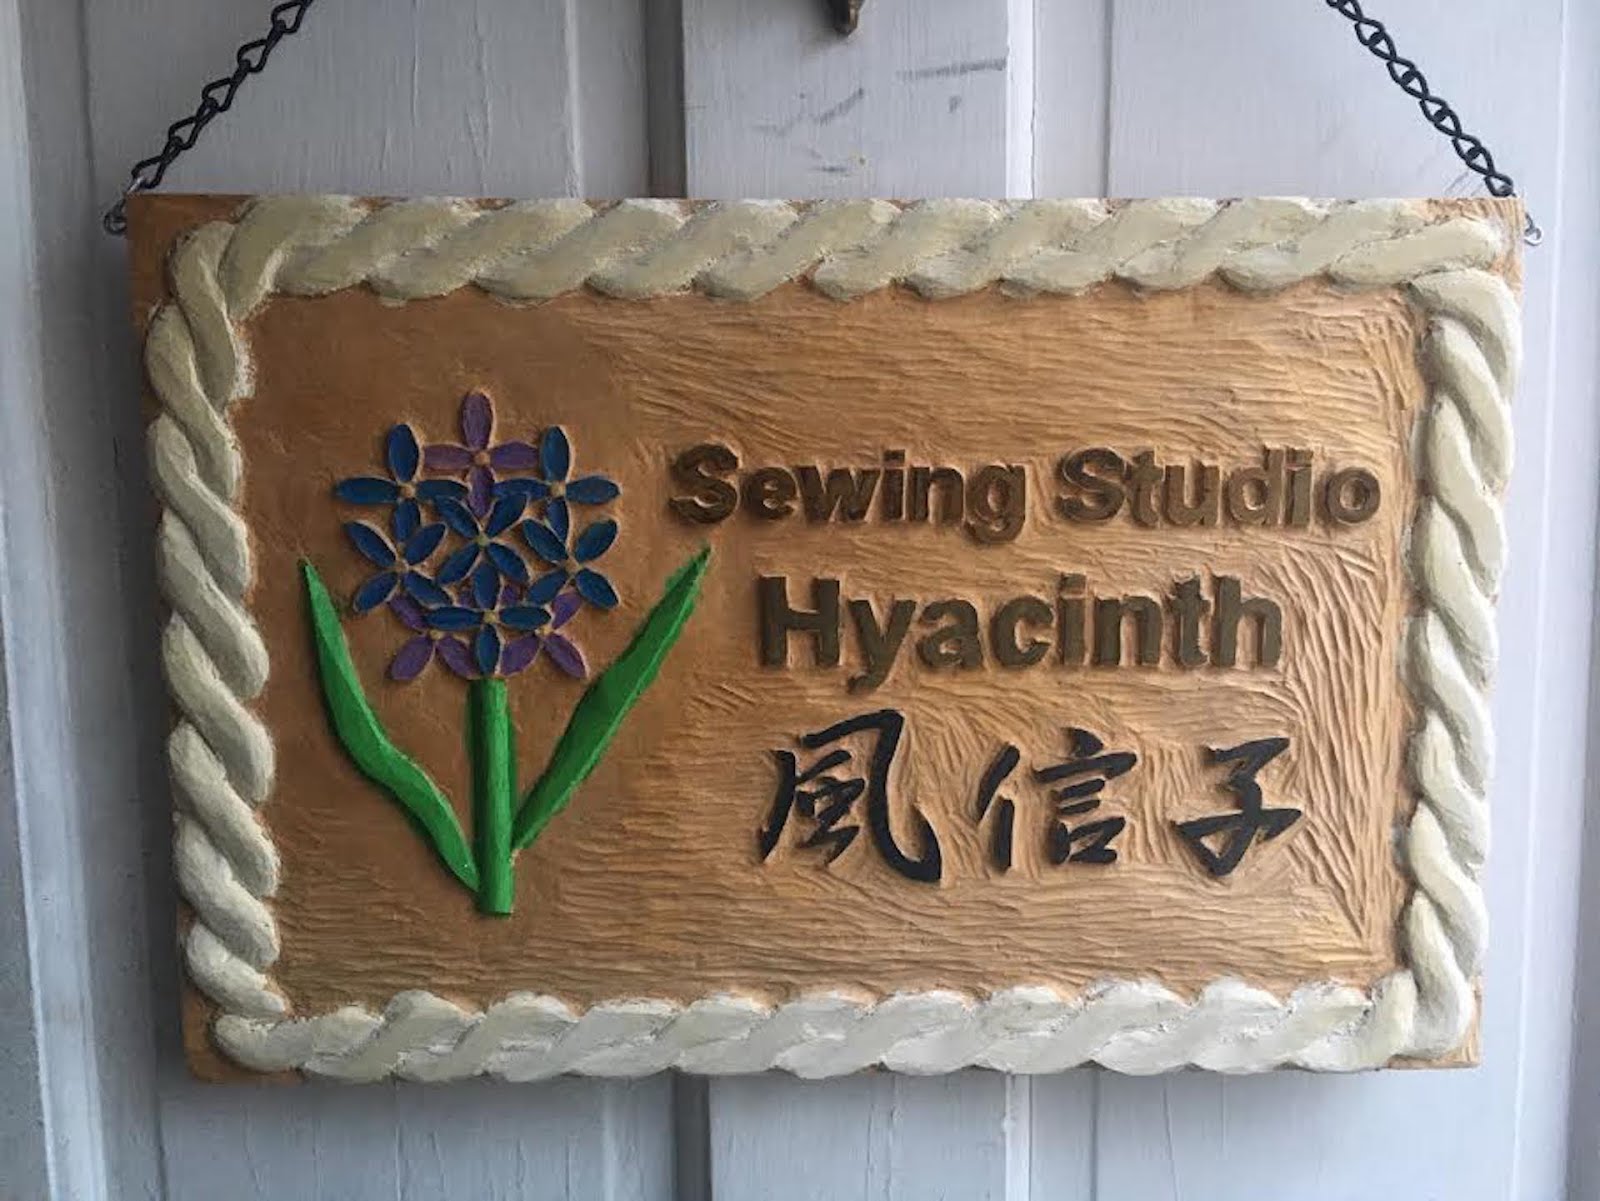 Studio Hyacinth